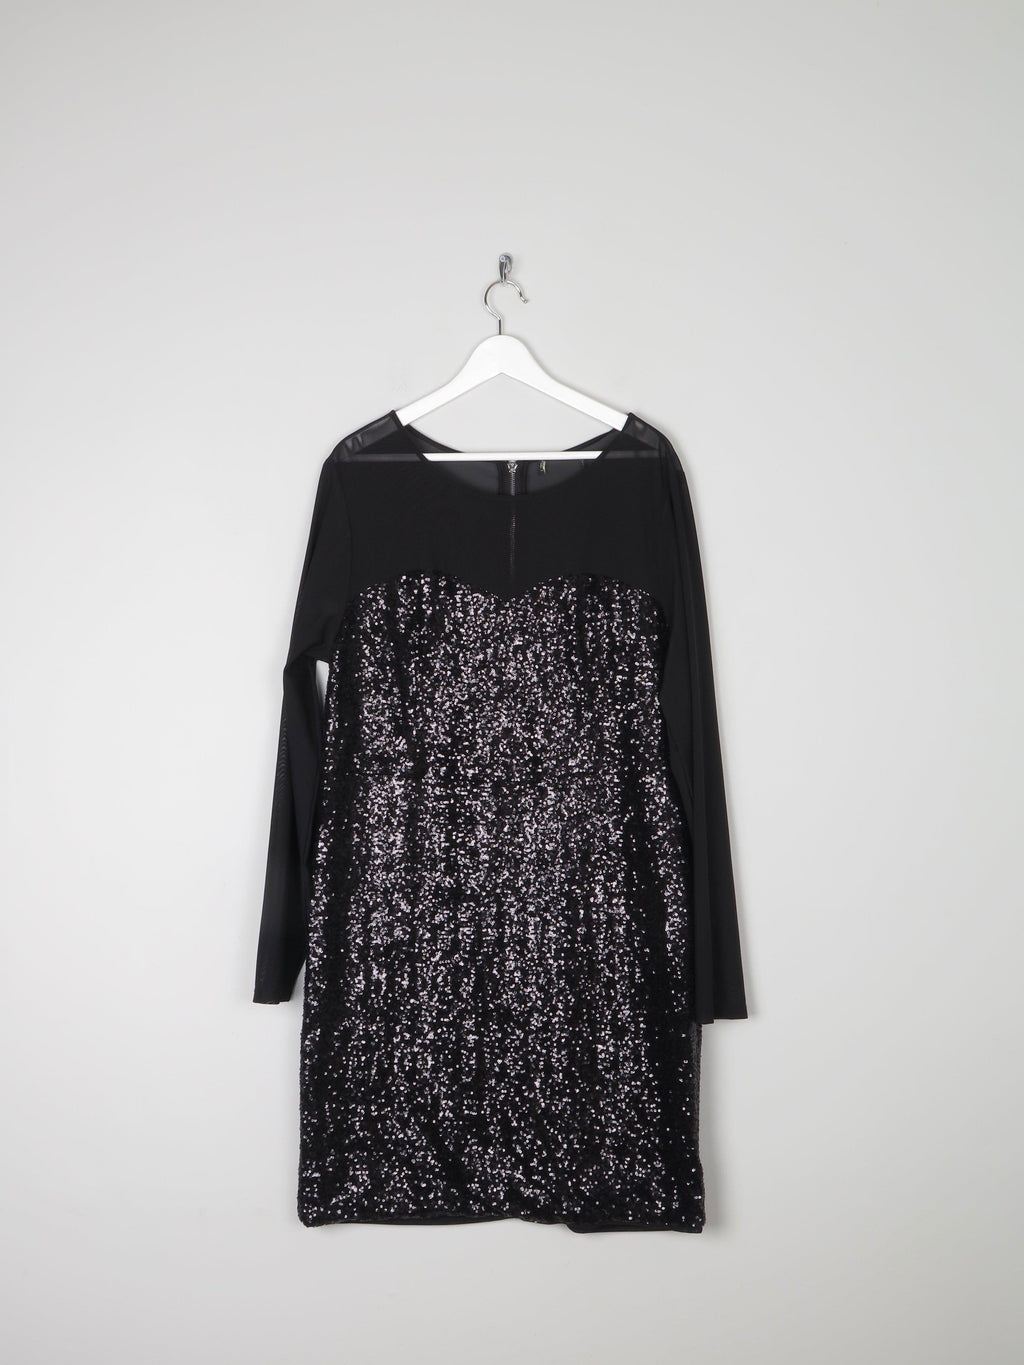 New Black Sequin & Black Dress XL/XXL - The Harlequin